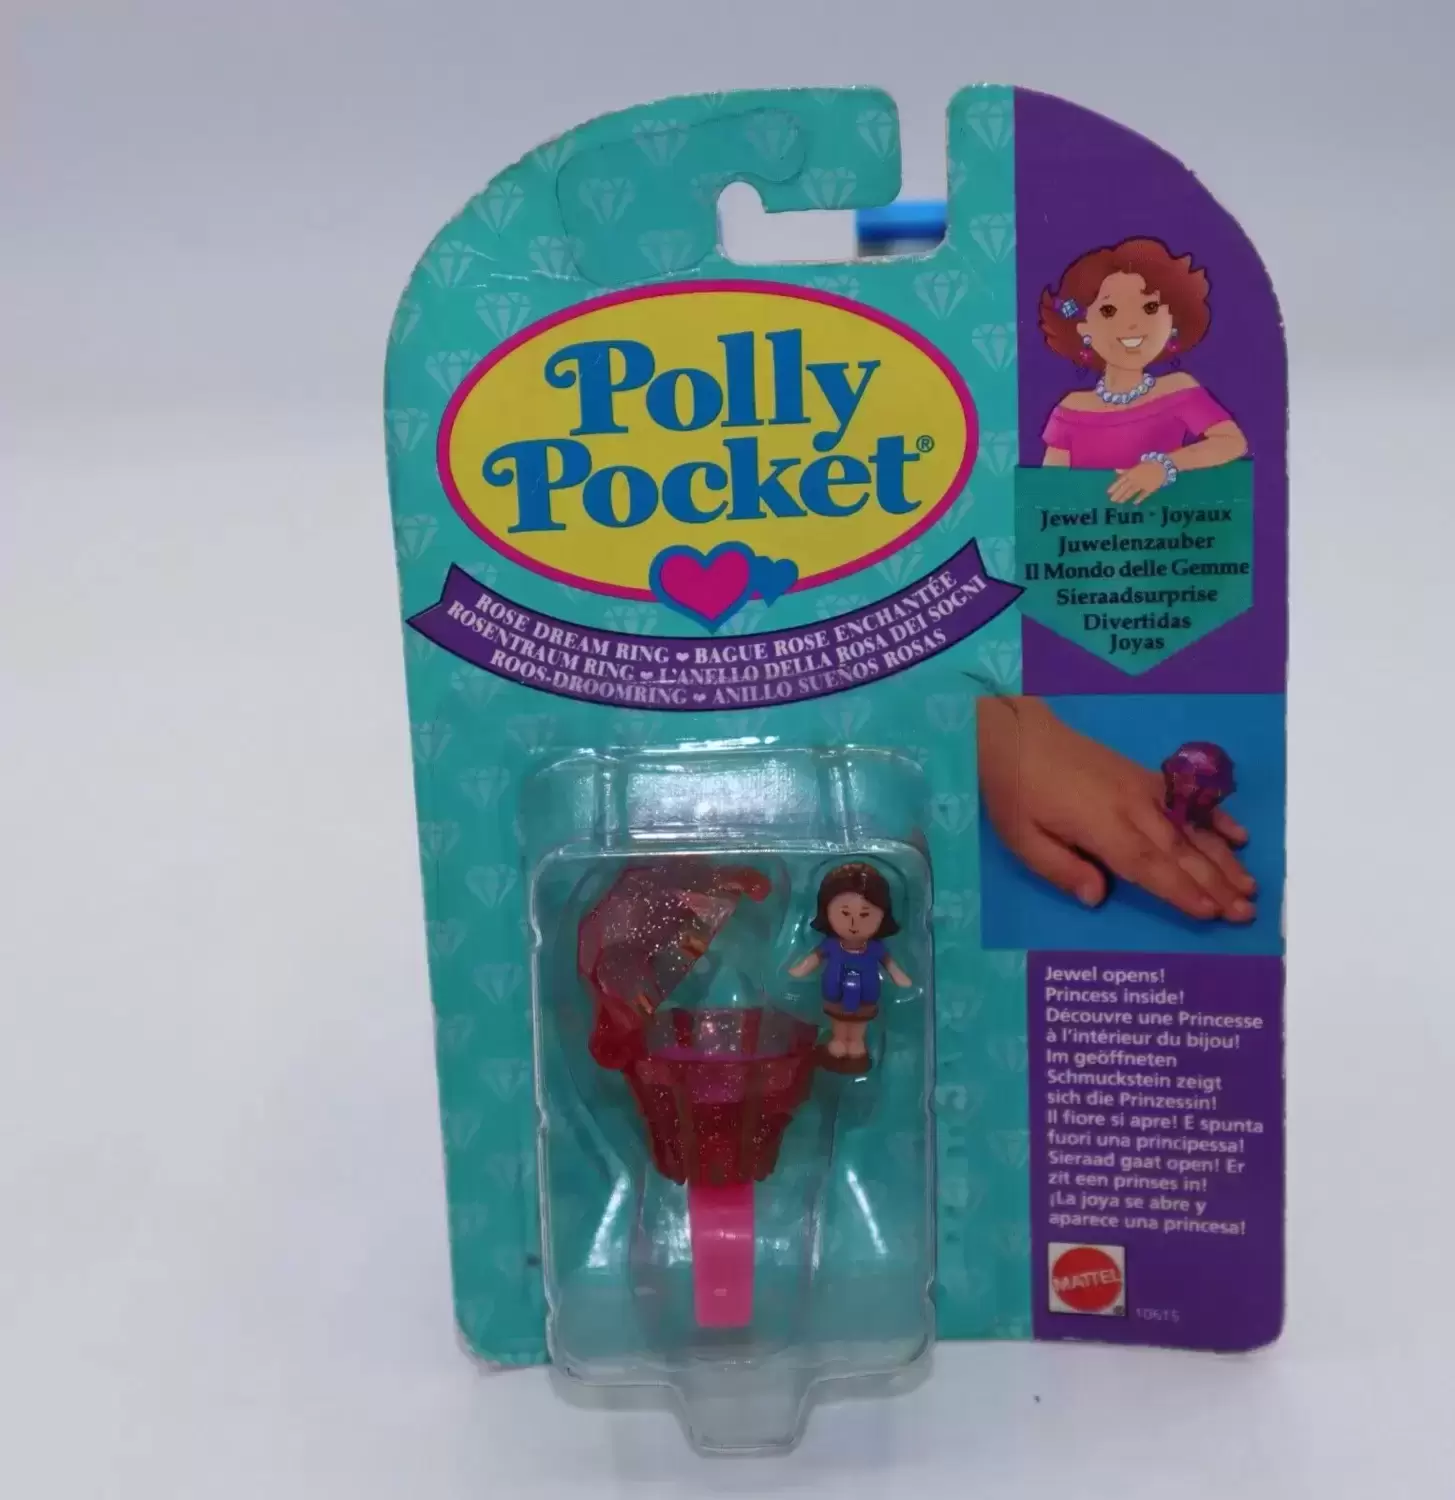 Polly Pocket (1989 - 1998) - Rose Dream Ring